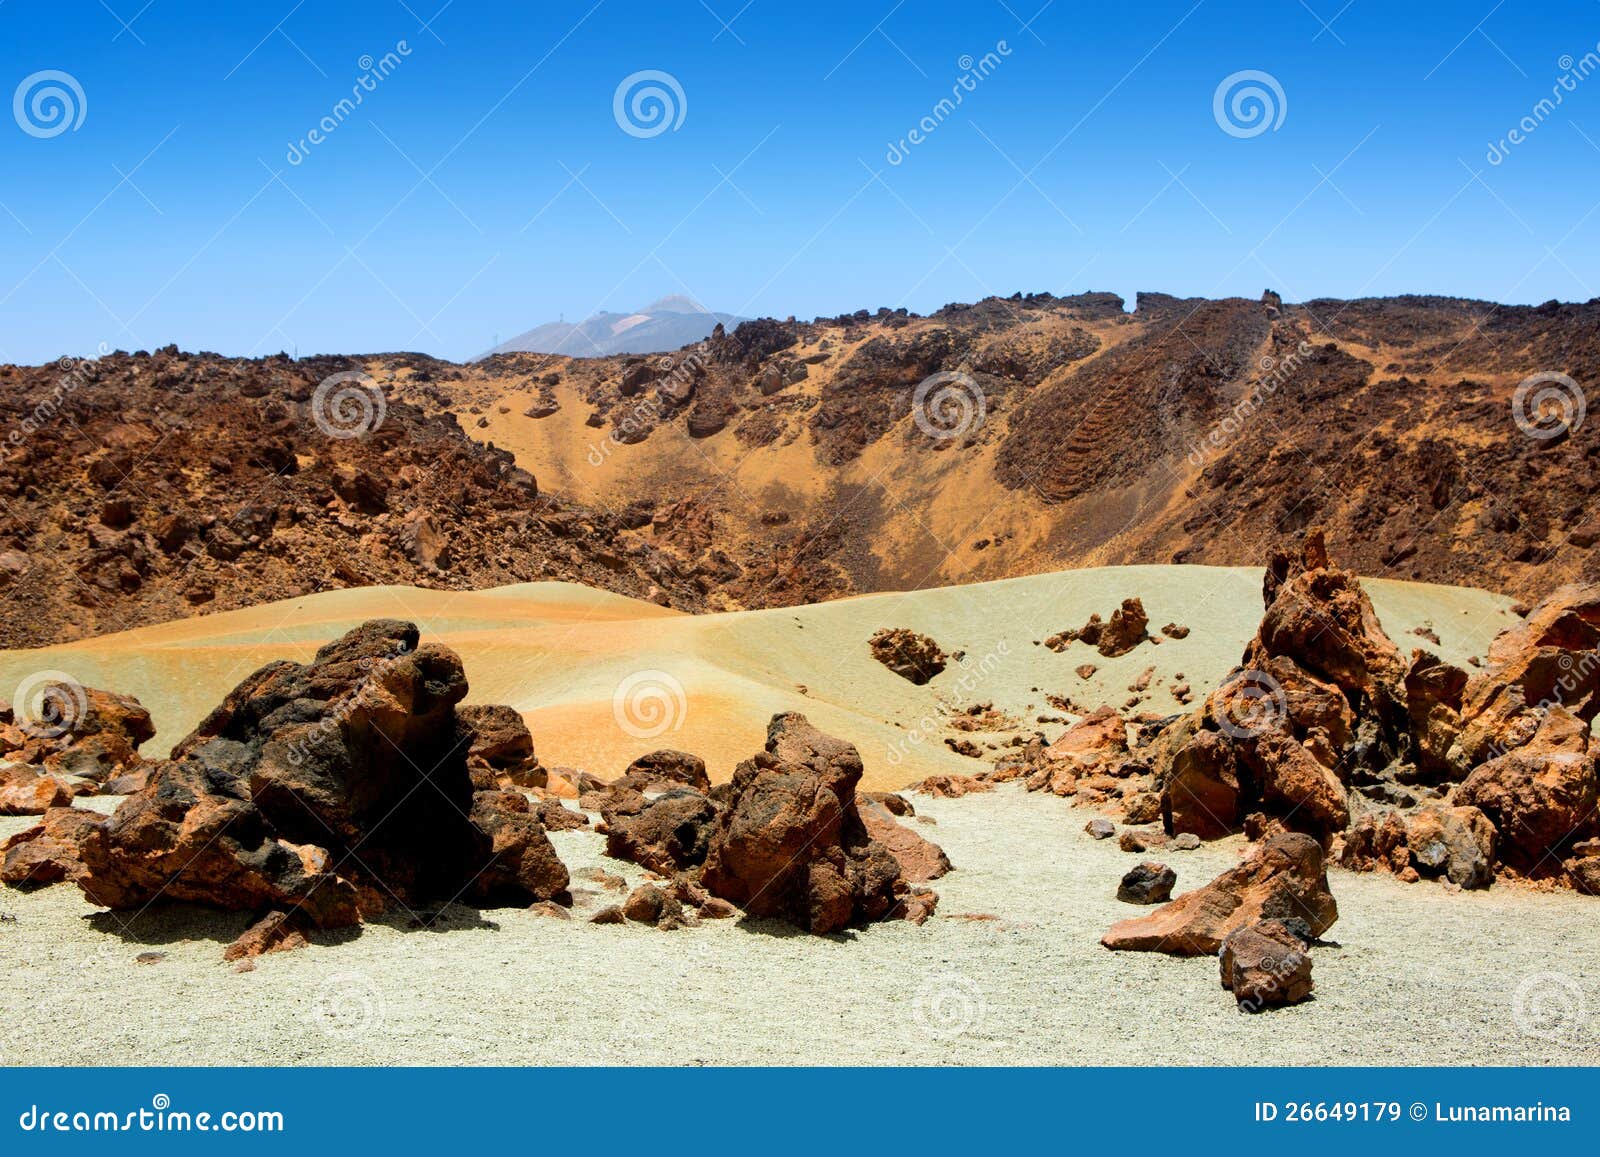 minas de san jose in teide national park